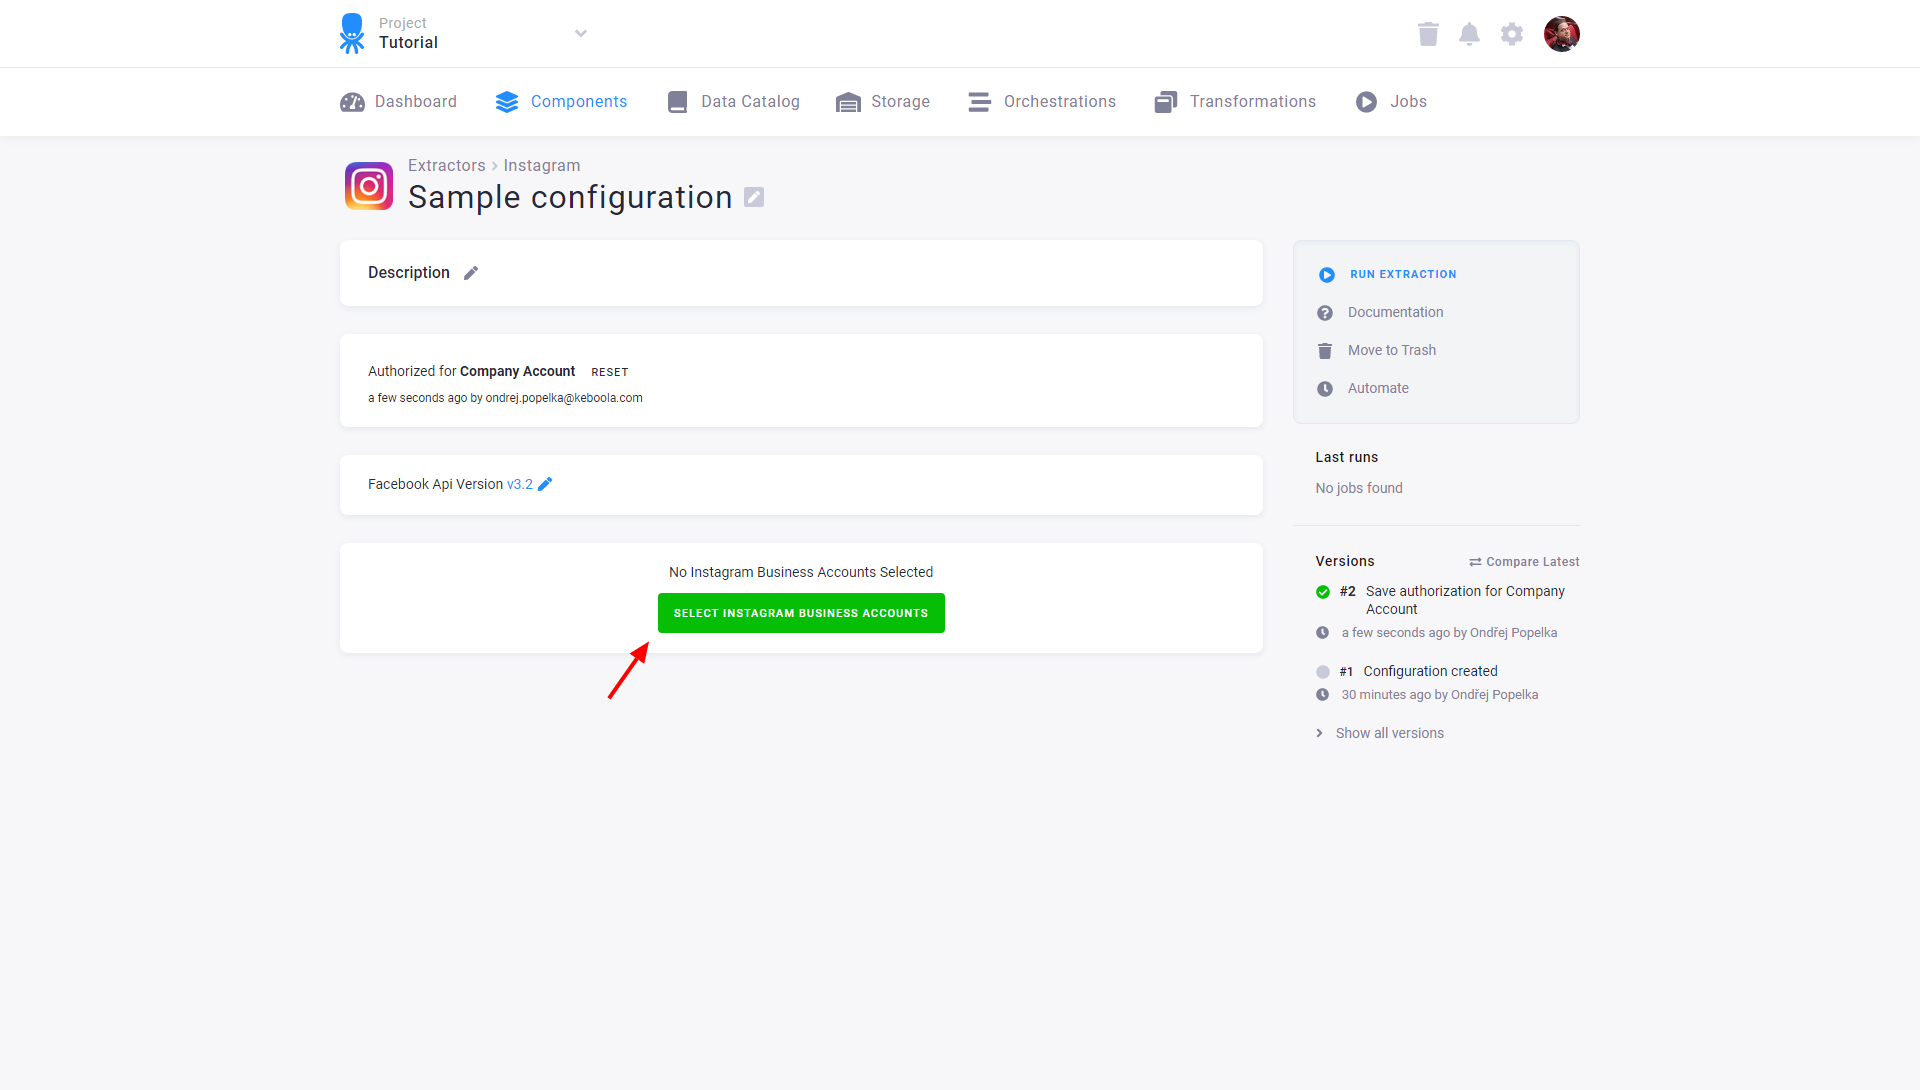 Screenshot - Authorize configuration